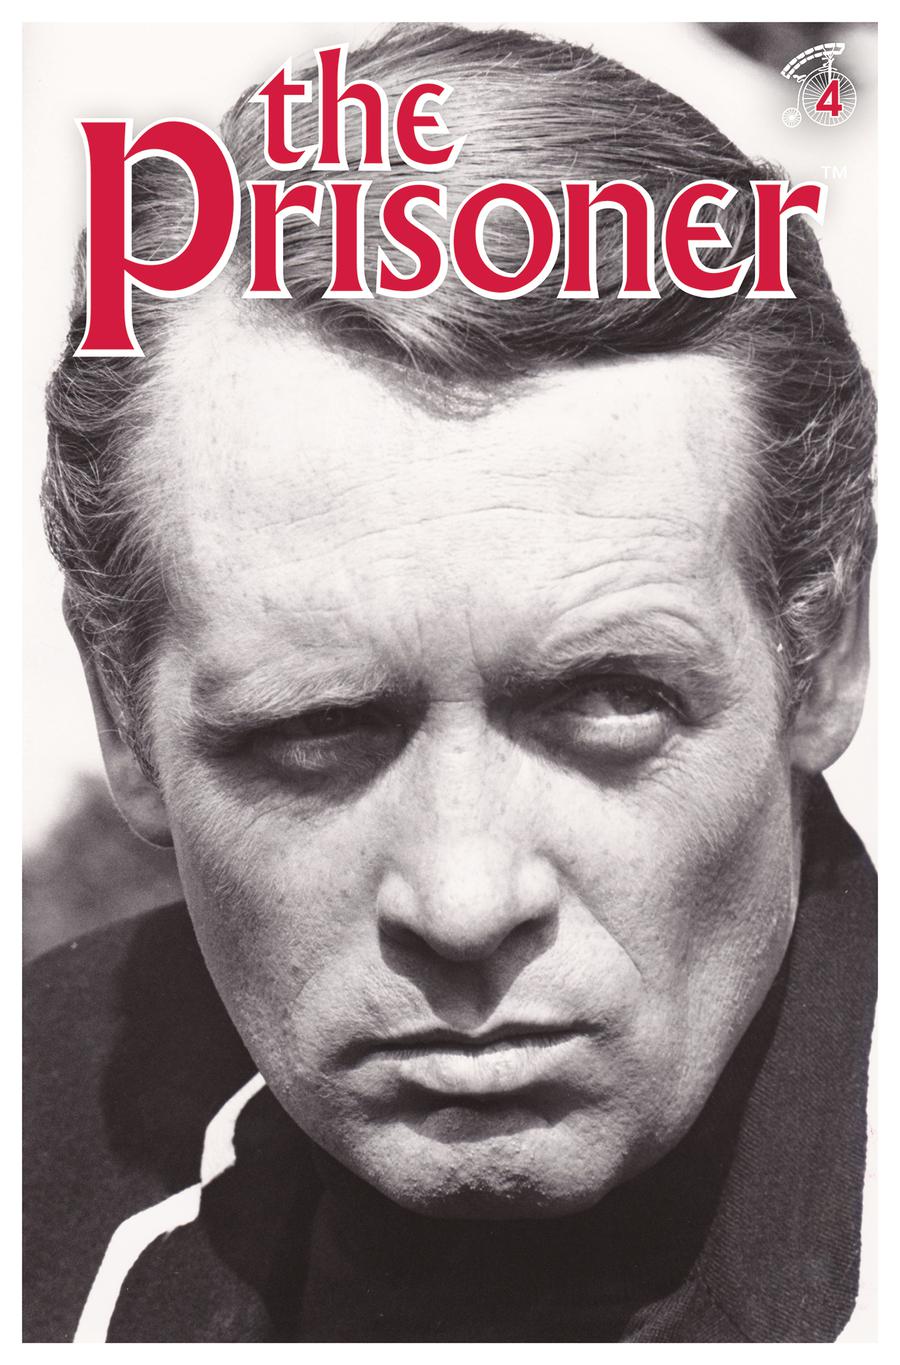 Prisoner Vol 2 #4 Cover B Variant Photo Cover